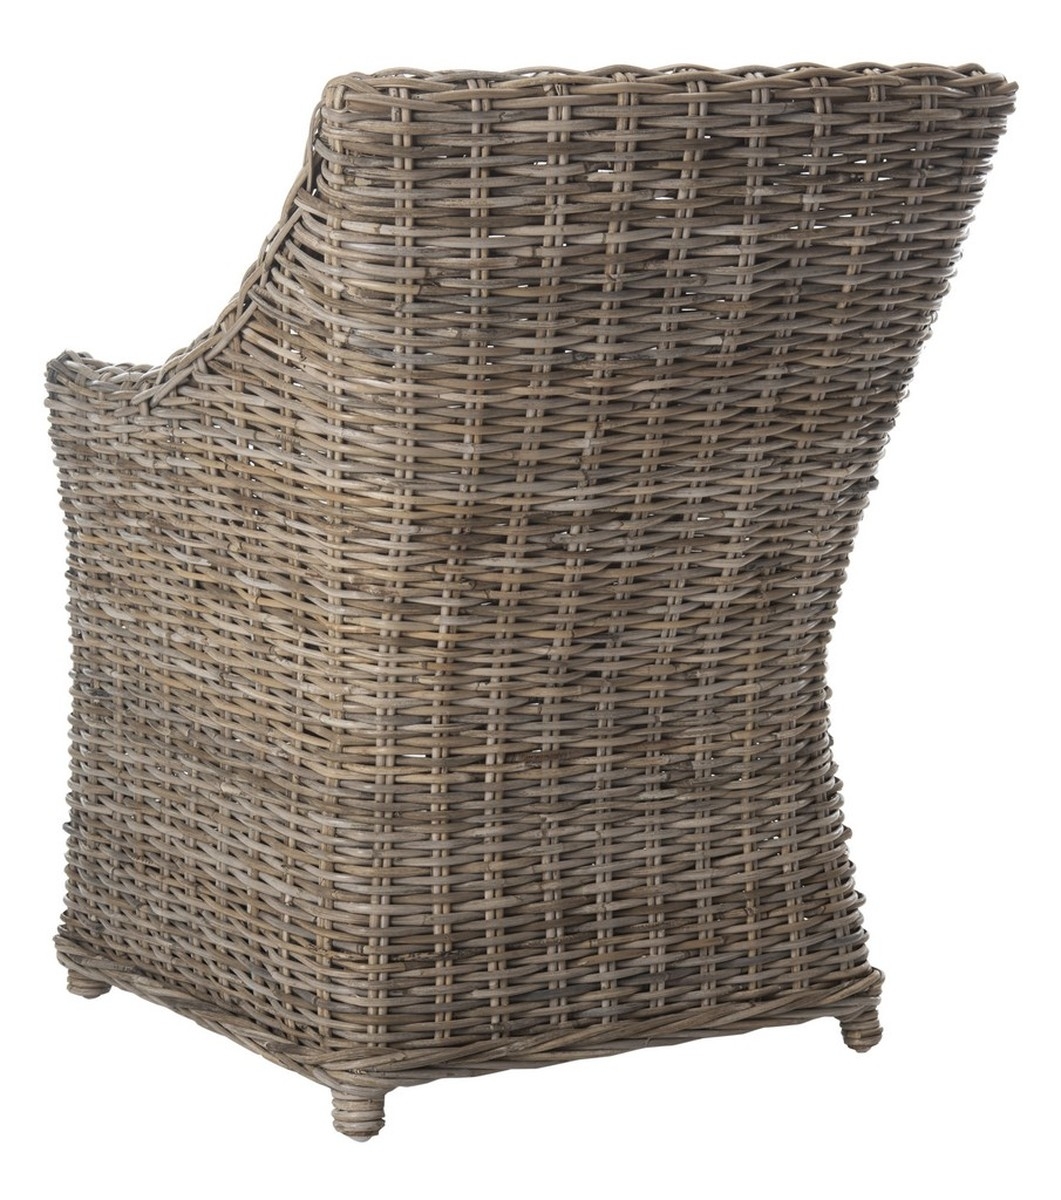 Ventura Rattan Arm Chair - Brown/White - Safavieh - Image 3